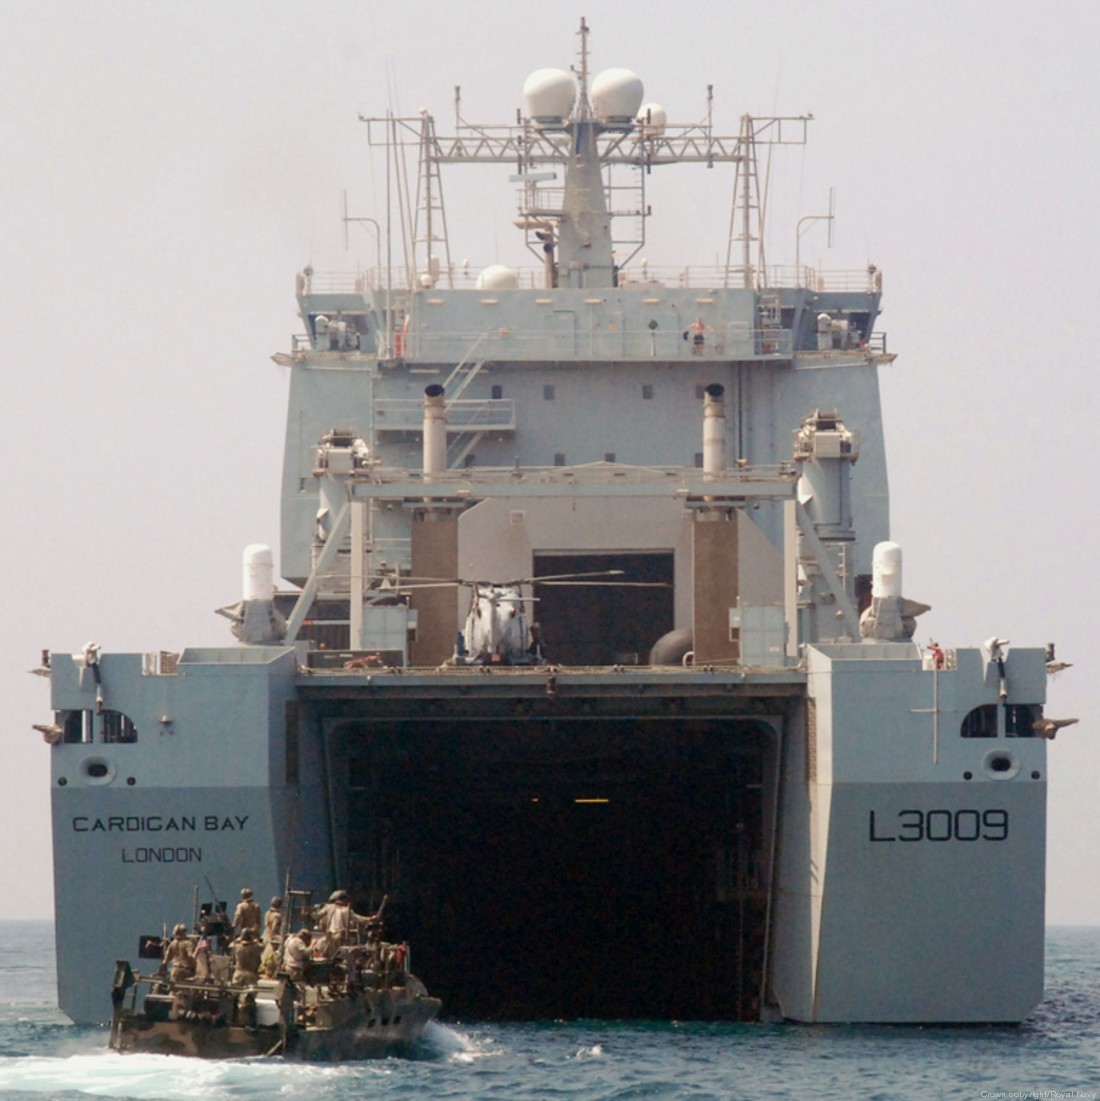 l-3009 rfa cardigan bay dock landing ship lsd royal fleet auxilary navy 18 well deck